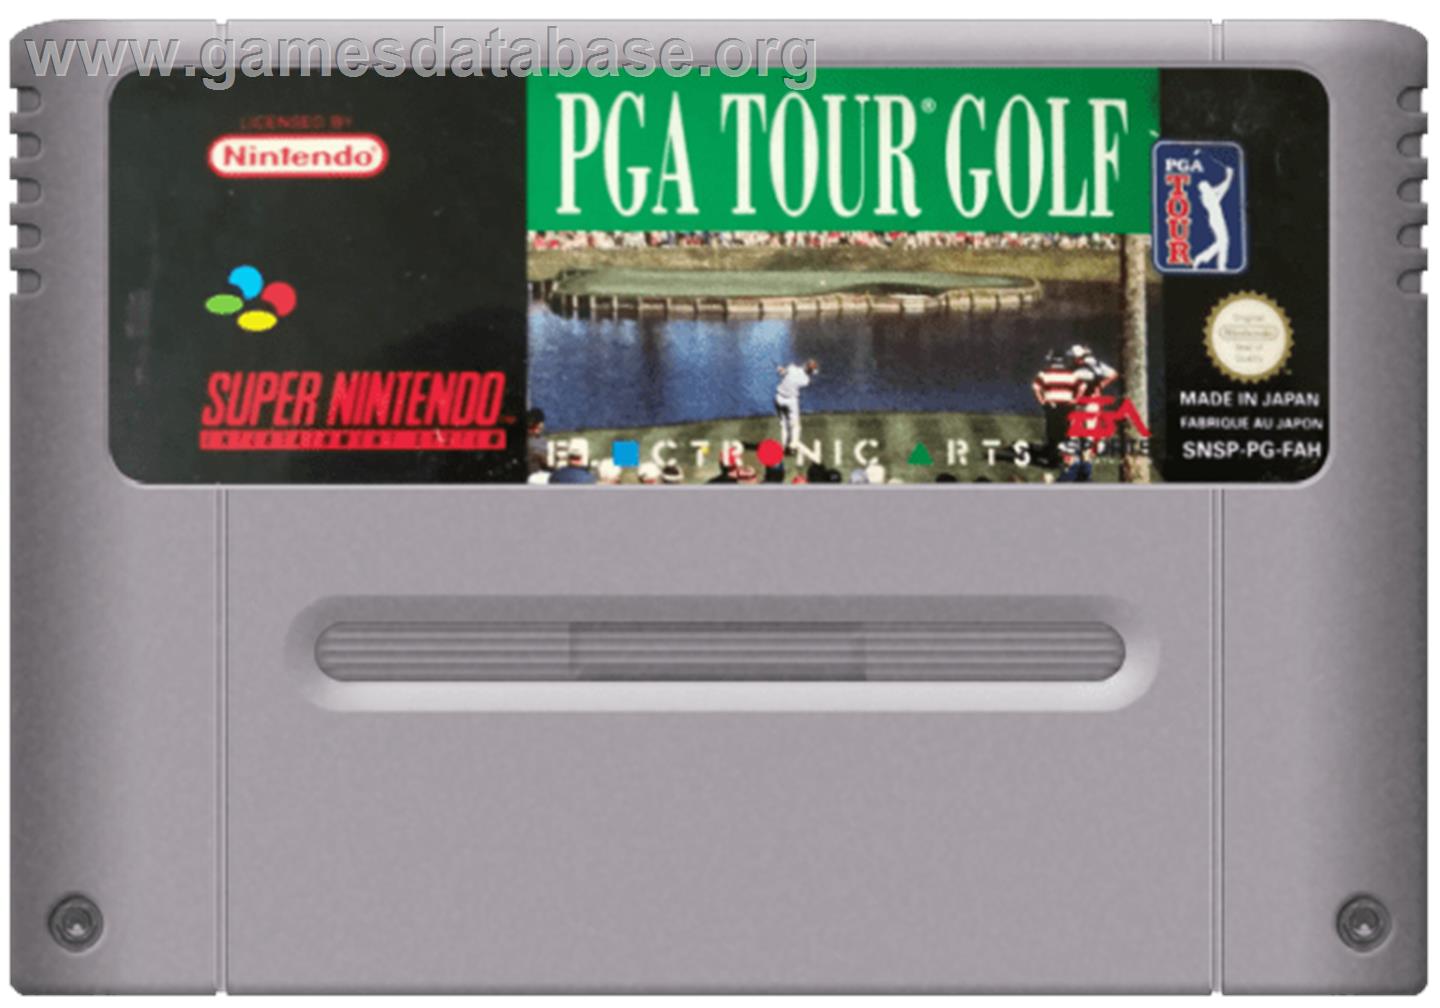 PGA Tour Golf - Nintendo SNES - Artwork - Cartridge